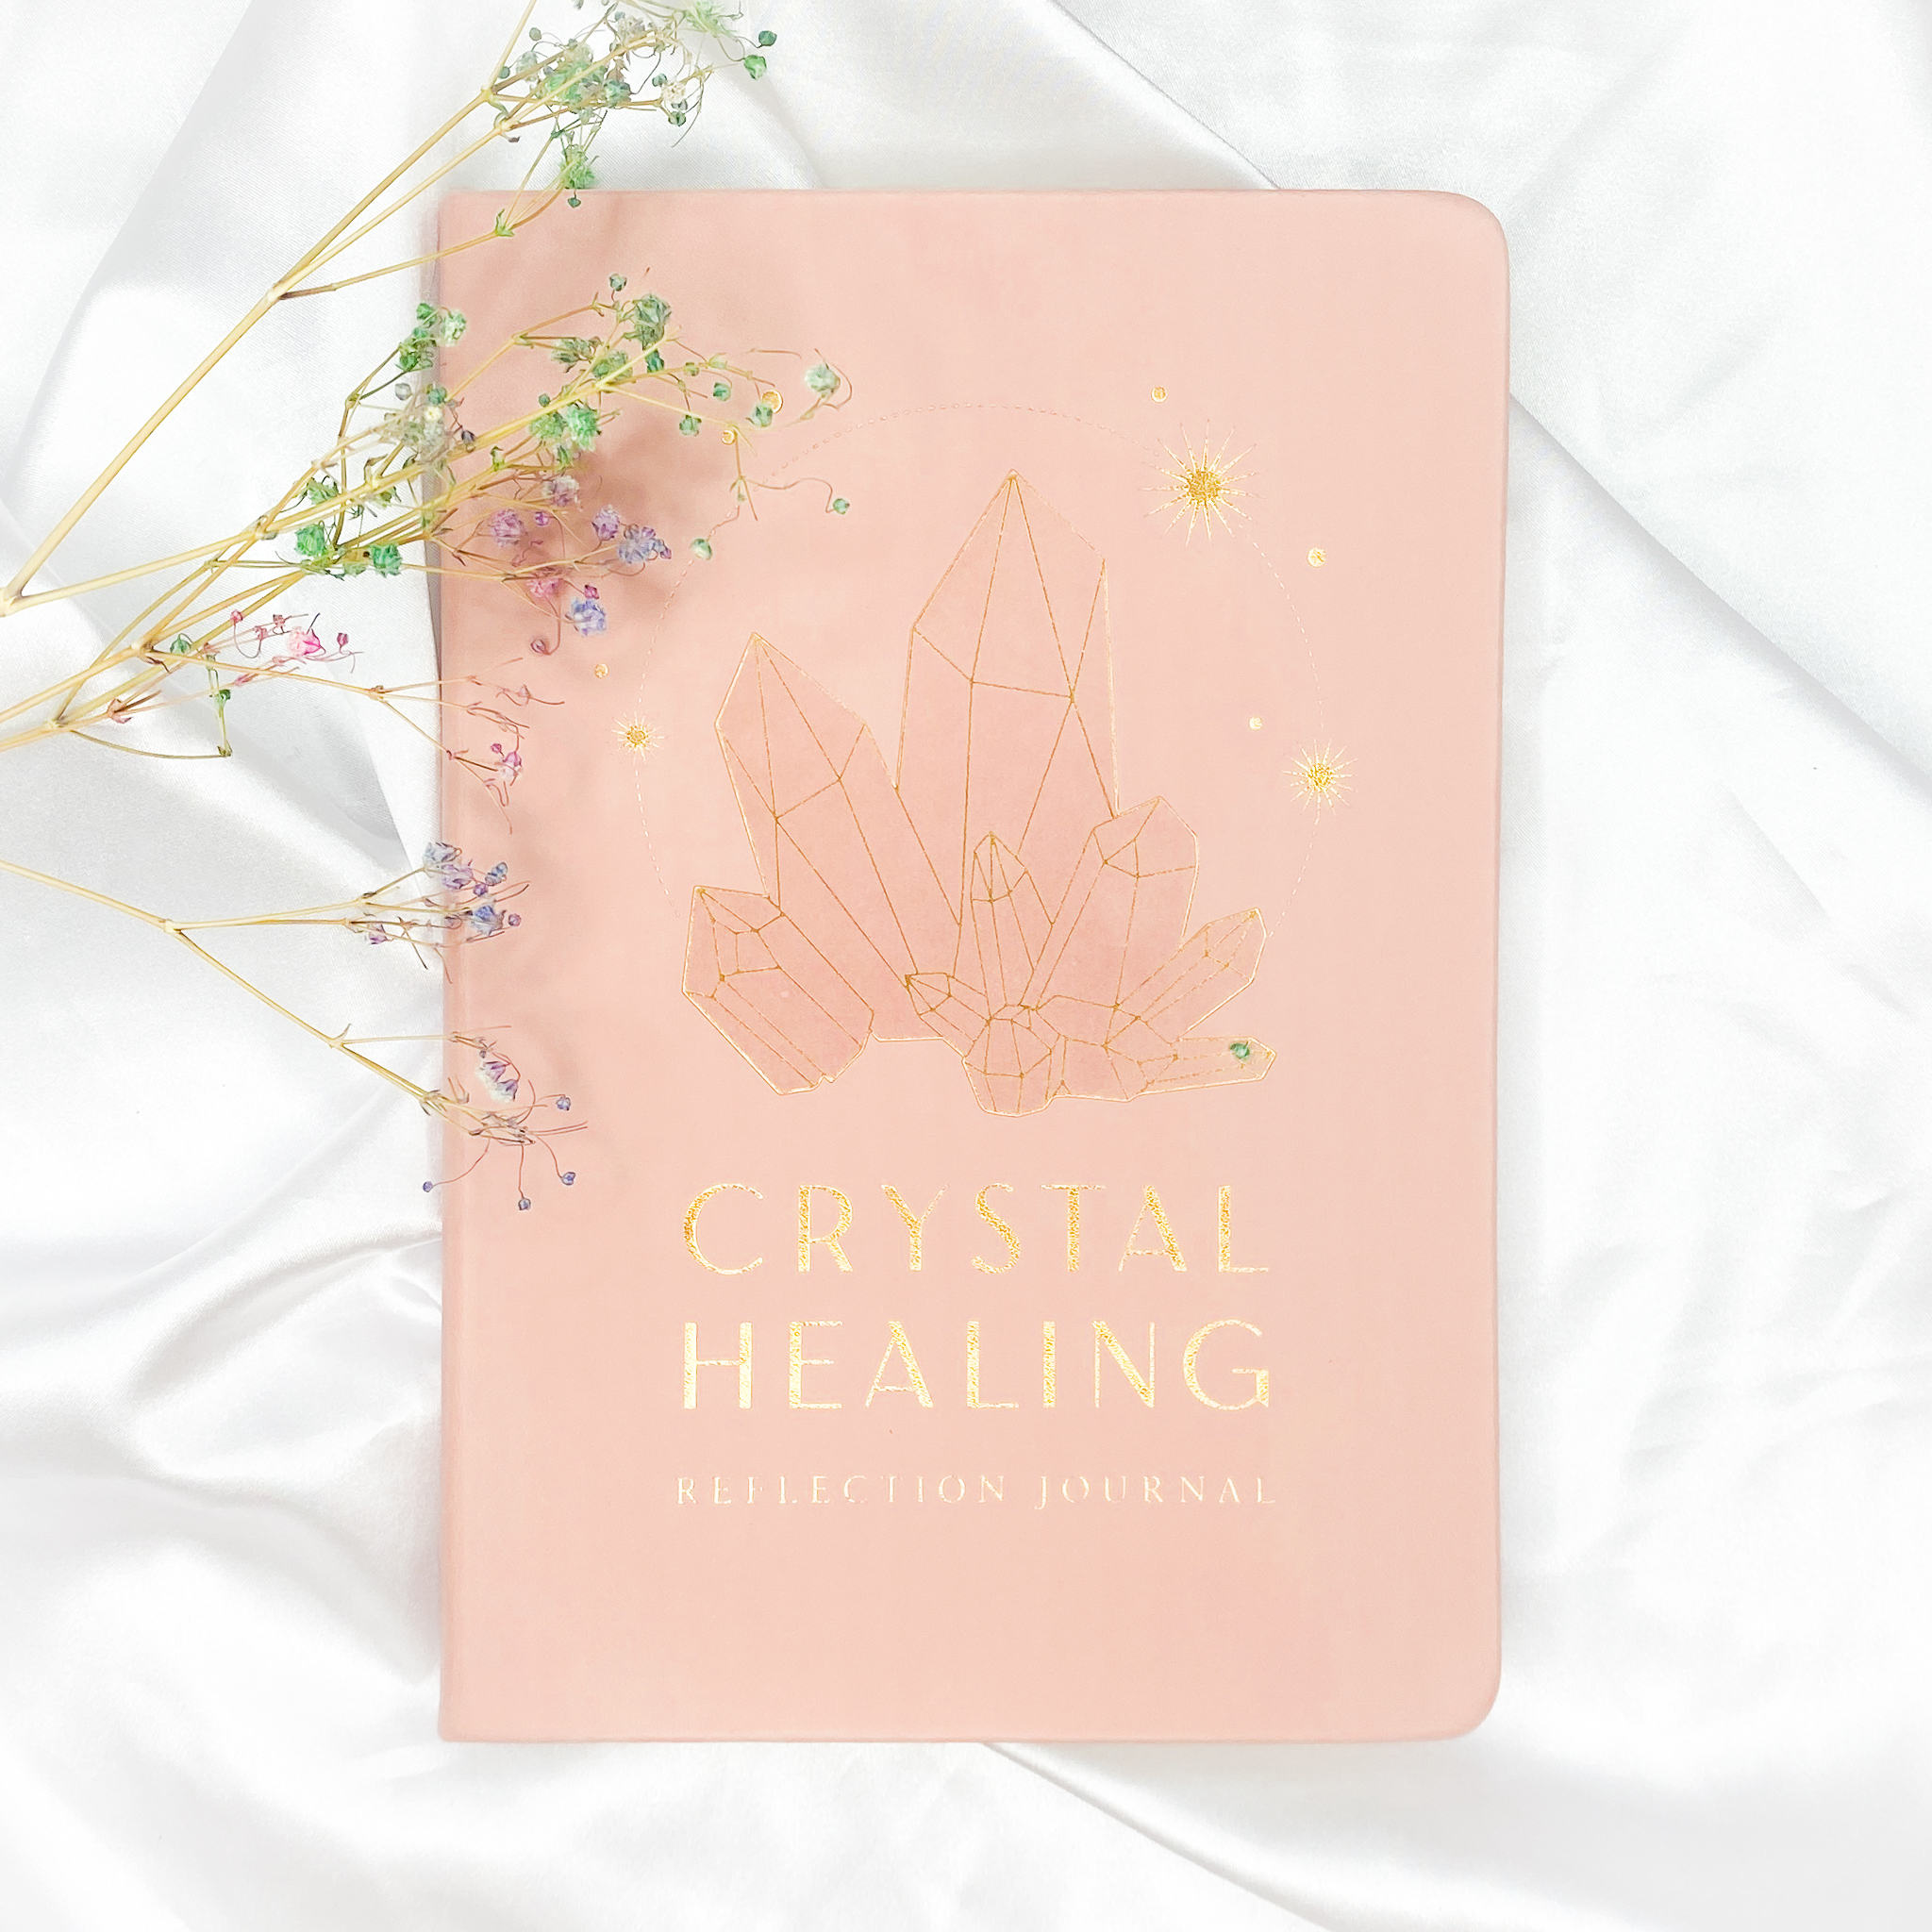 Crystal Healing reflection Journal